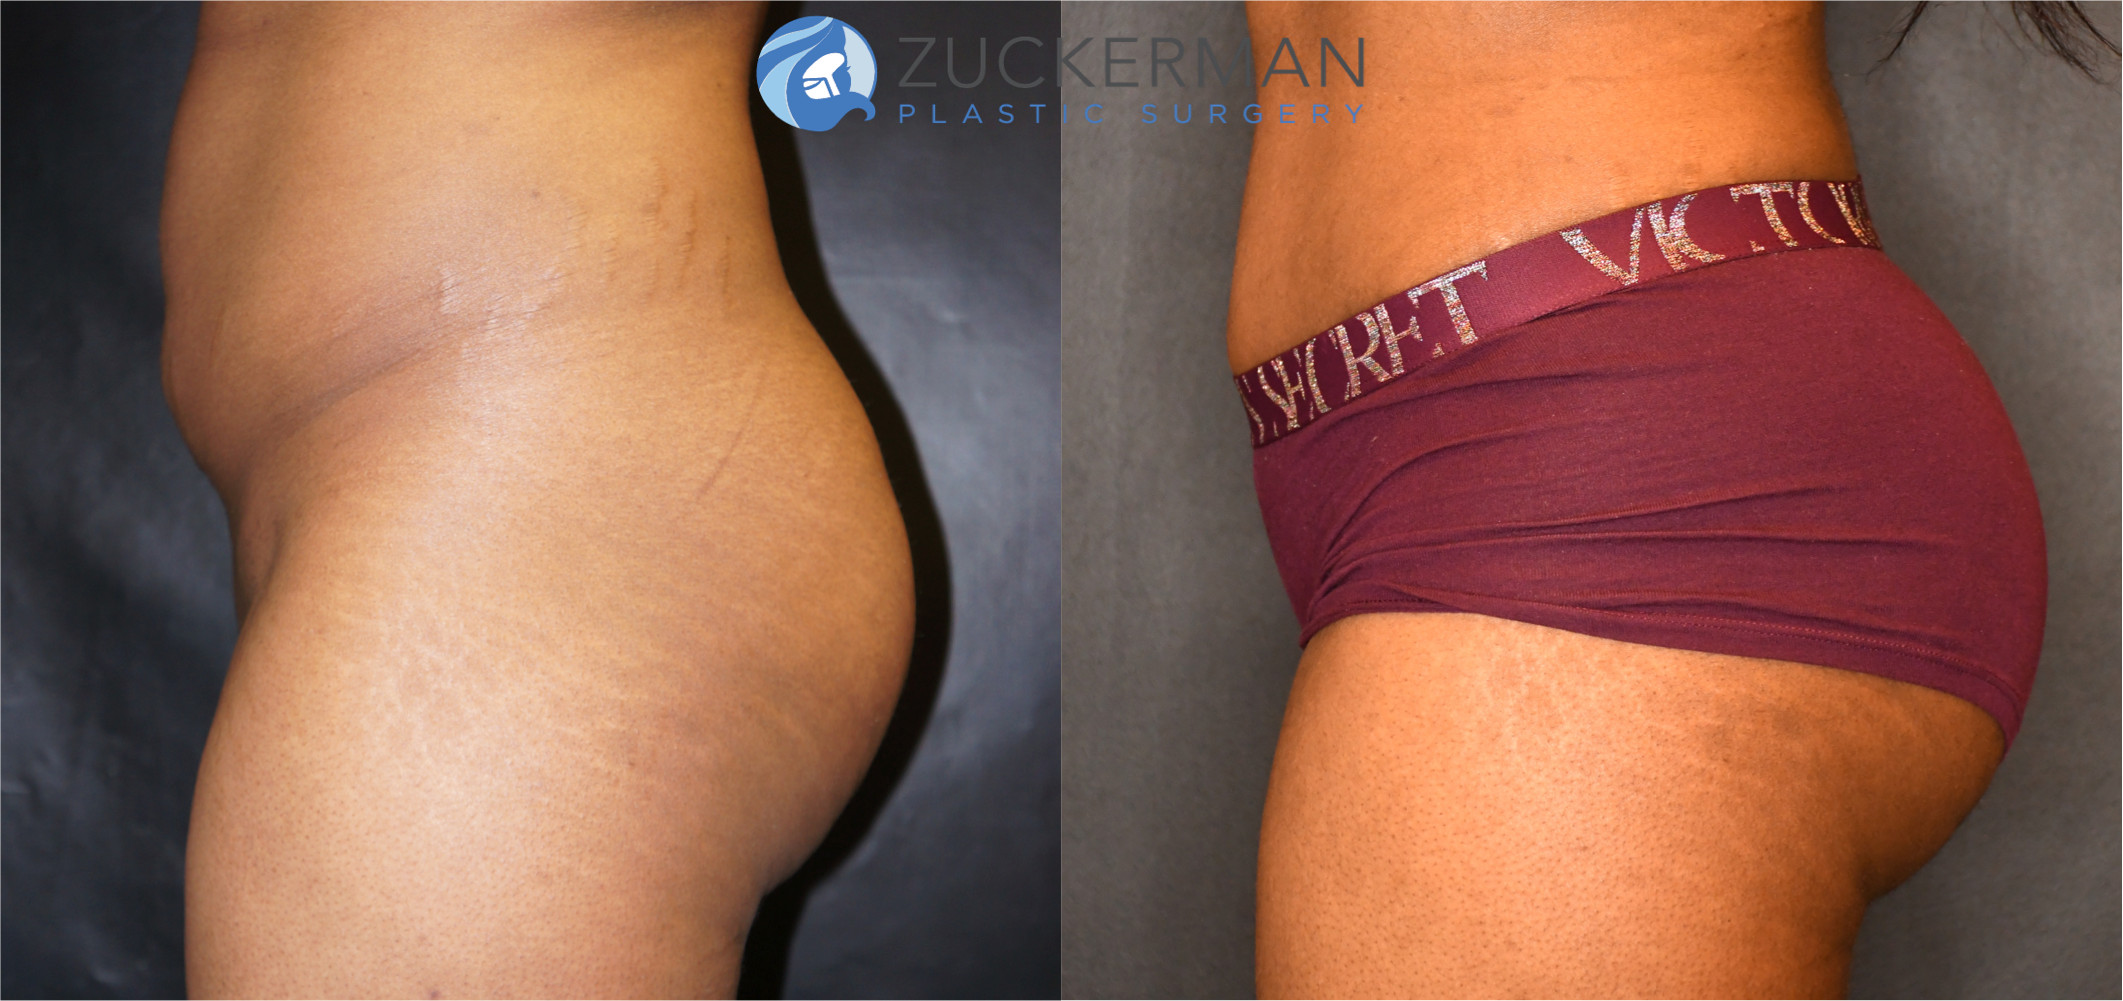 brazilian butt lift, buttock augmentation, bbl, before and after, joshua zuckerman, 12, posterior left profile view